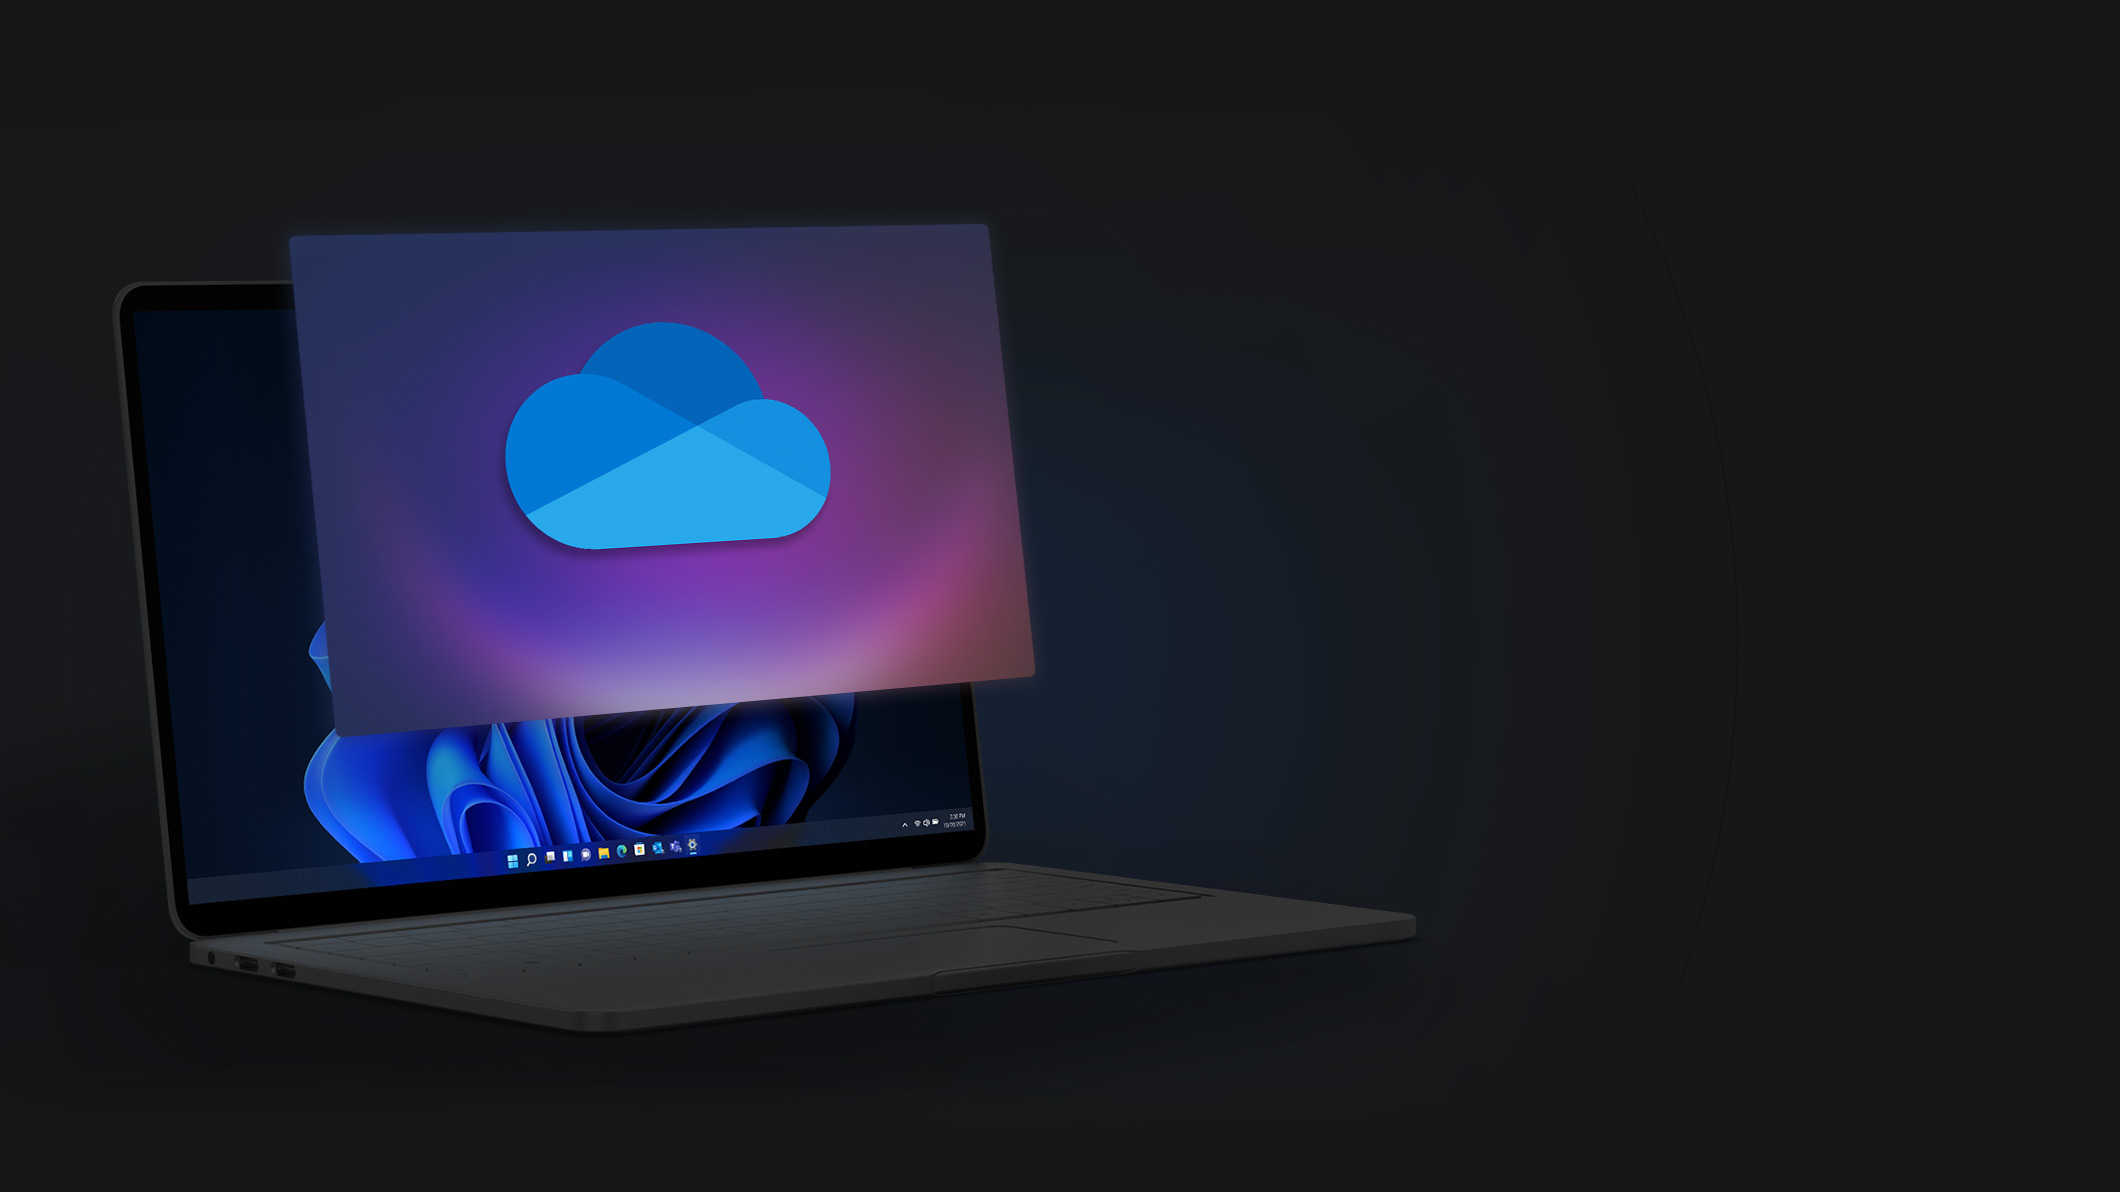 A blue cloud icon on a purple screen